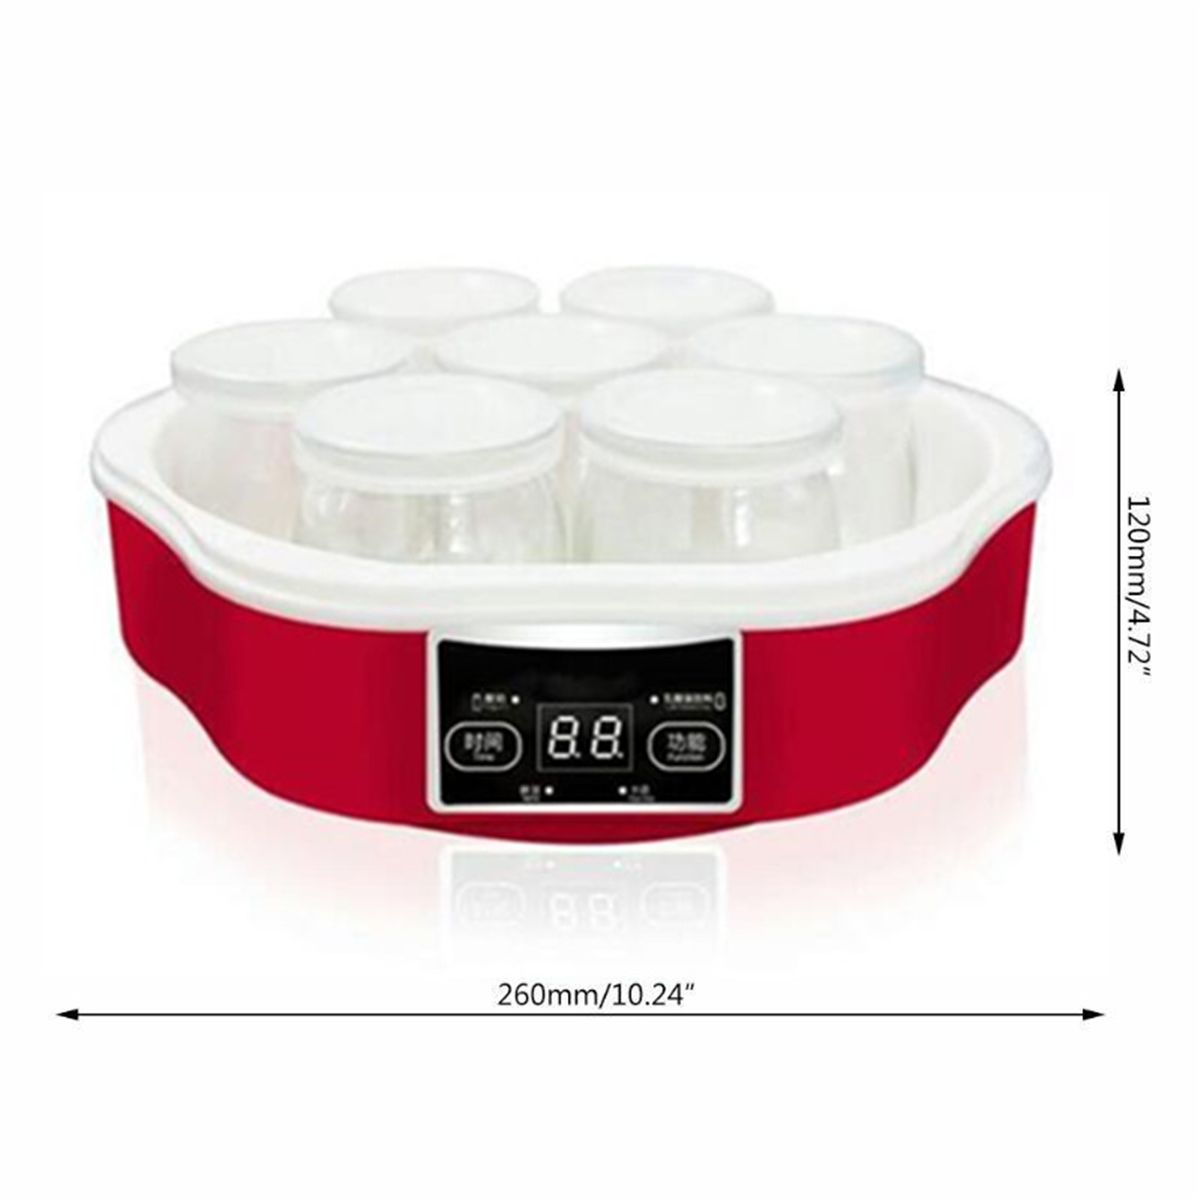 17L-Yogurt-Maker-With-Timer-amp-7-Glass-Jars-Automatic-Smart-Touch-Screen-Control-Machine-1477367